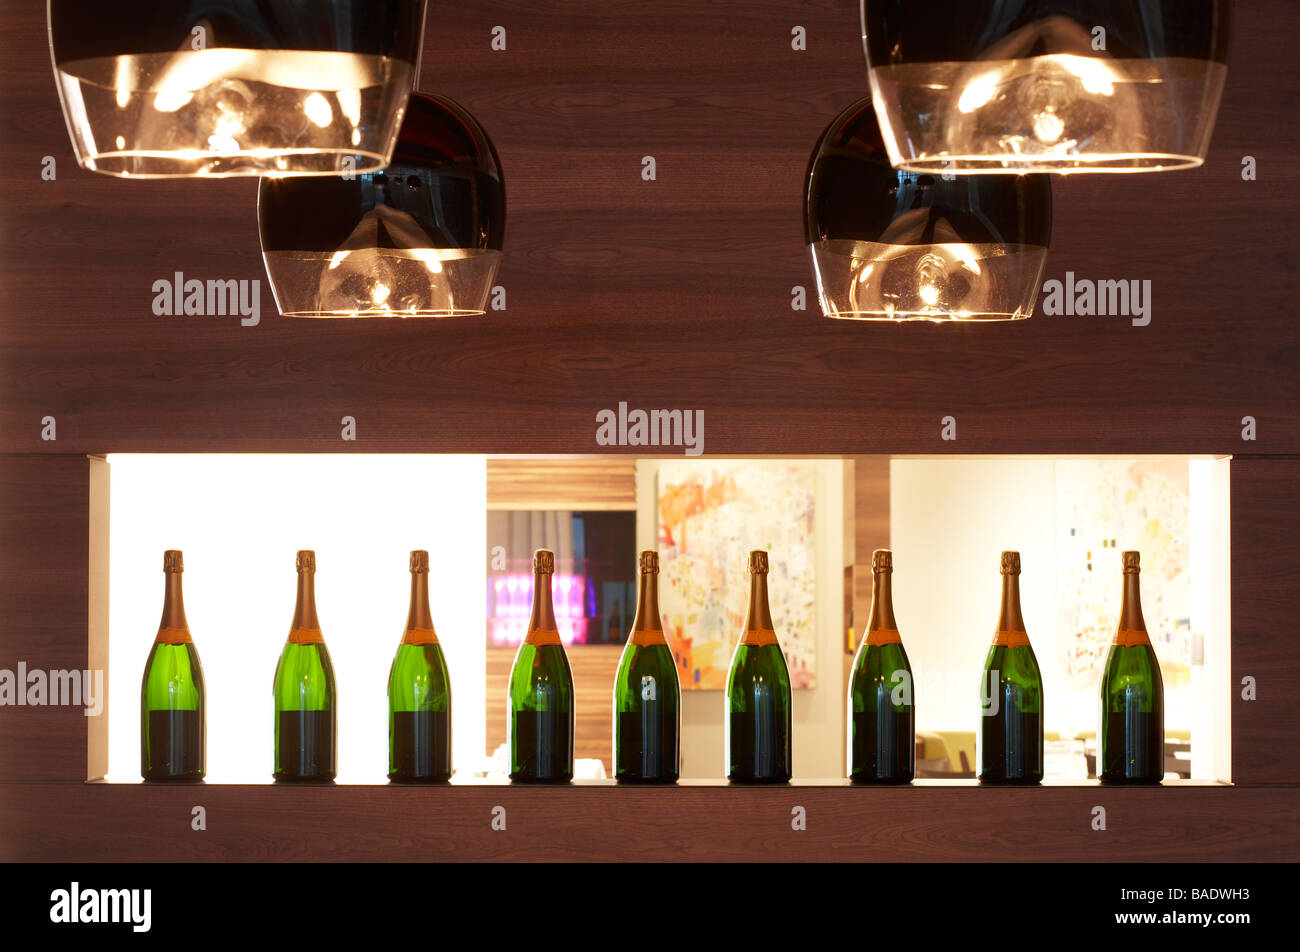 Row of Wine Bottles in Restaurant Stock Photo